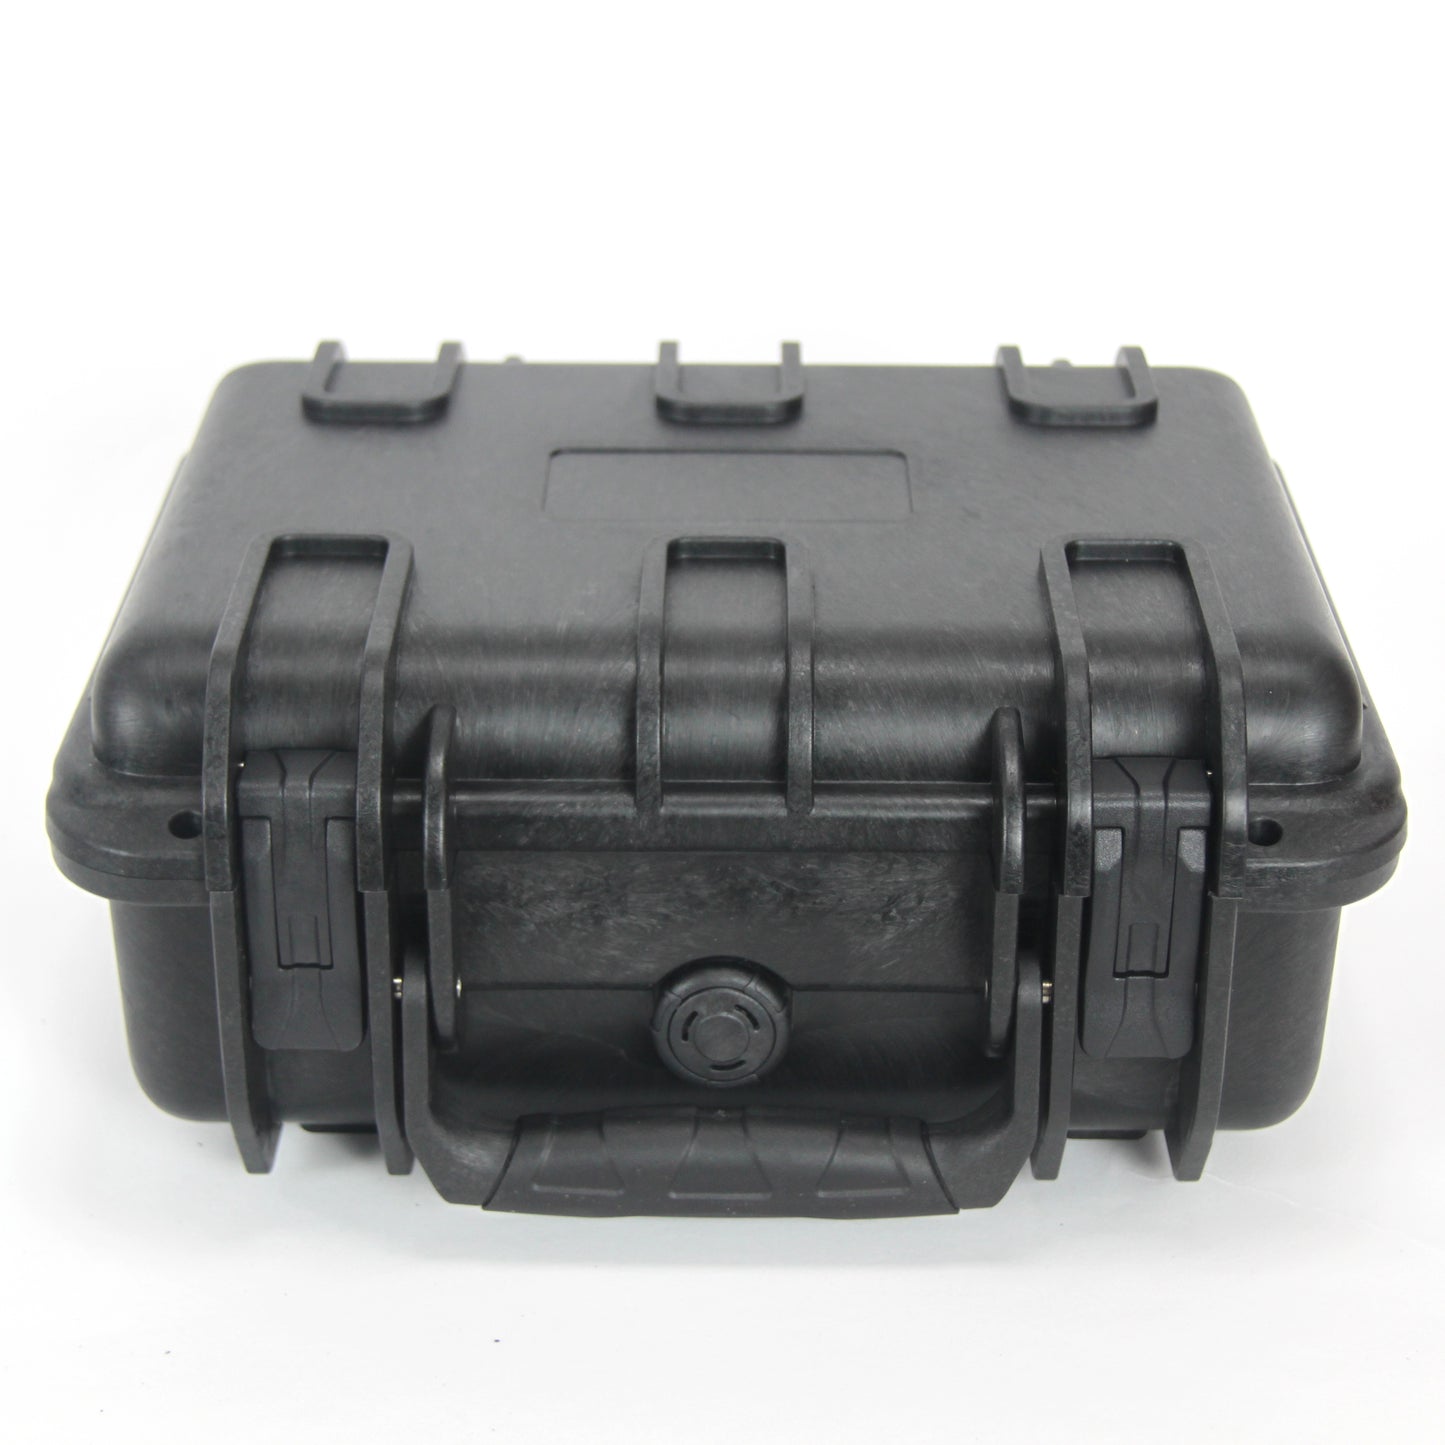 Portable Gun Case Waterproof Hard Case Gun Storage Box